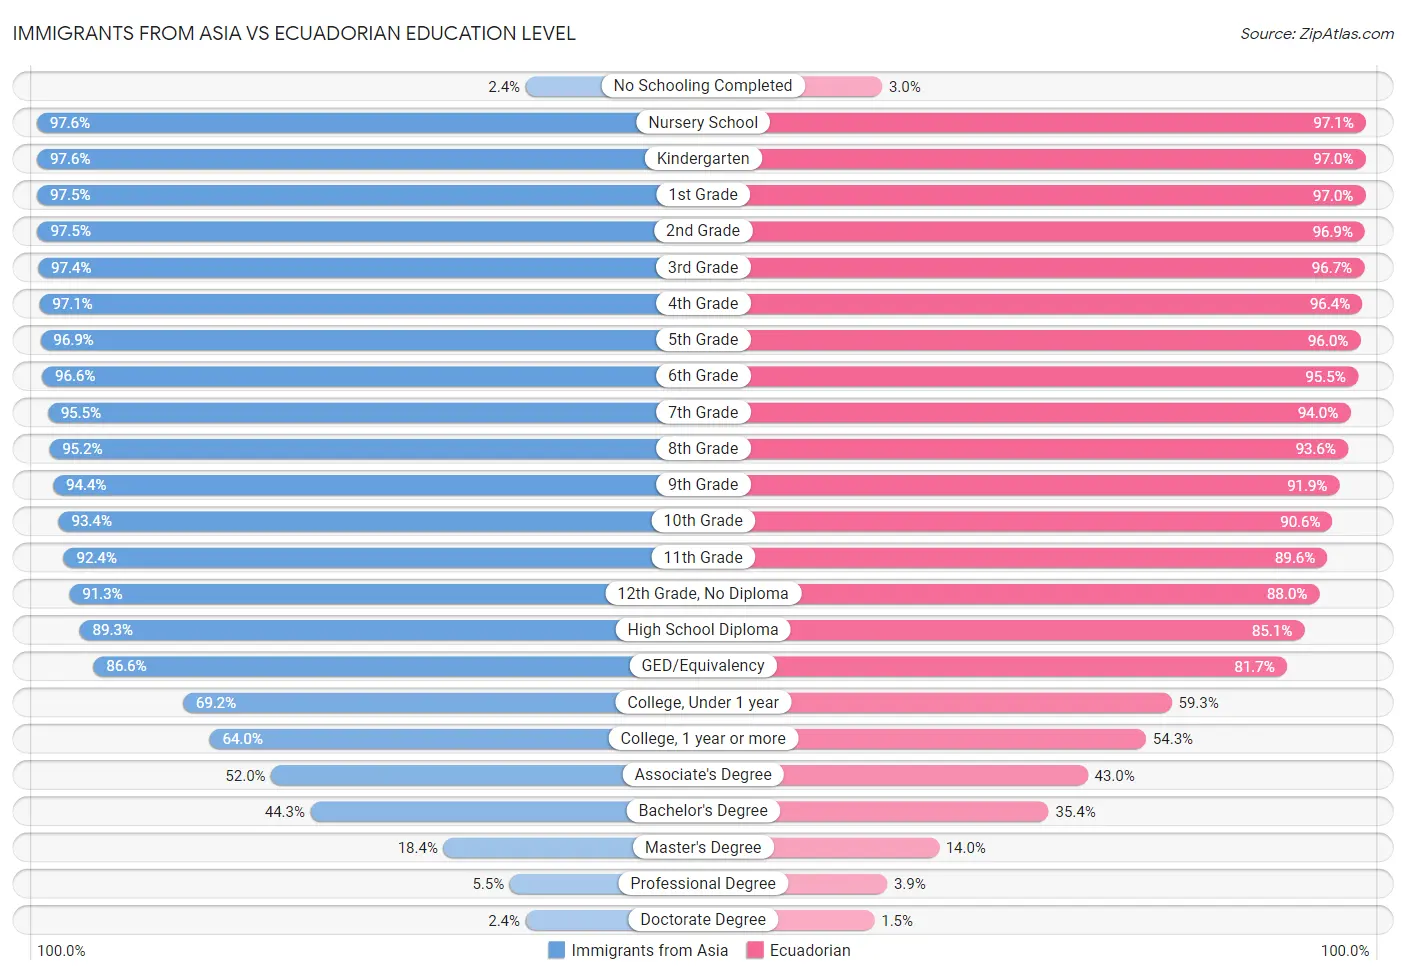 Immigrants from Asia vs Ecuadorian Education Level